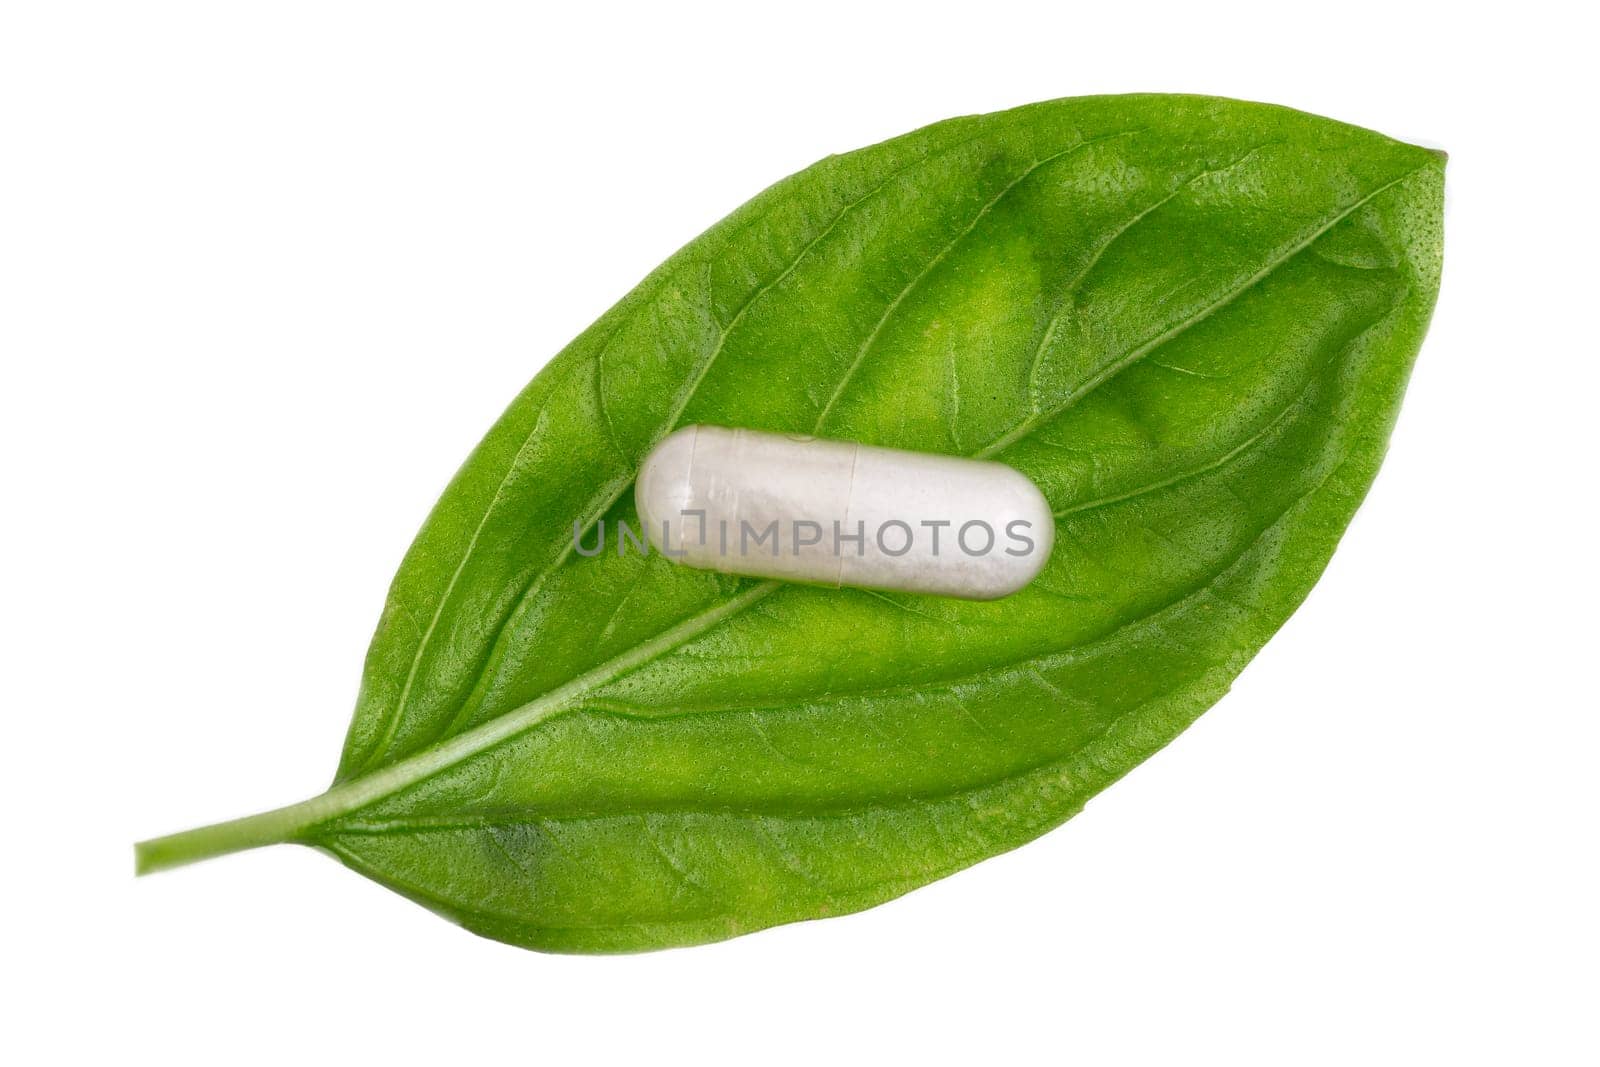 Close up vstevia leaves and pills used as a natural sweetener. Stevia rebaudiana.